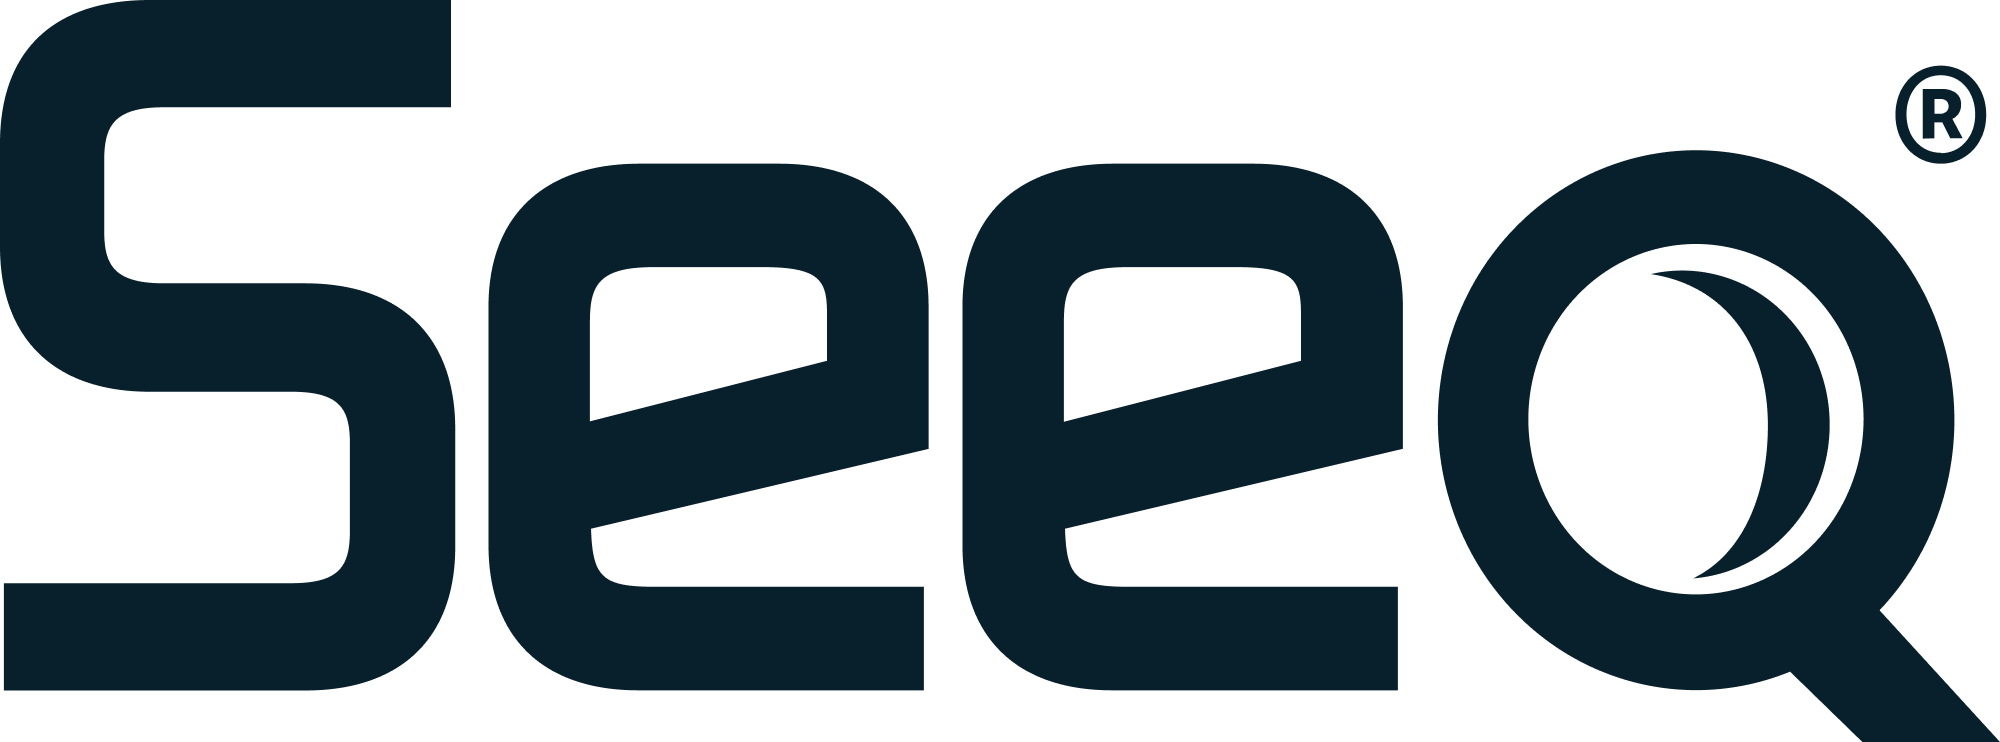 Seeq Logo